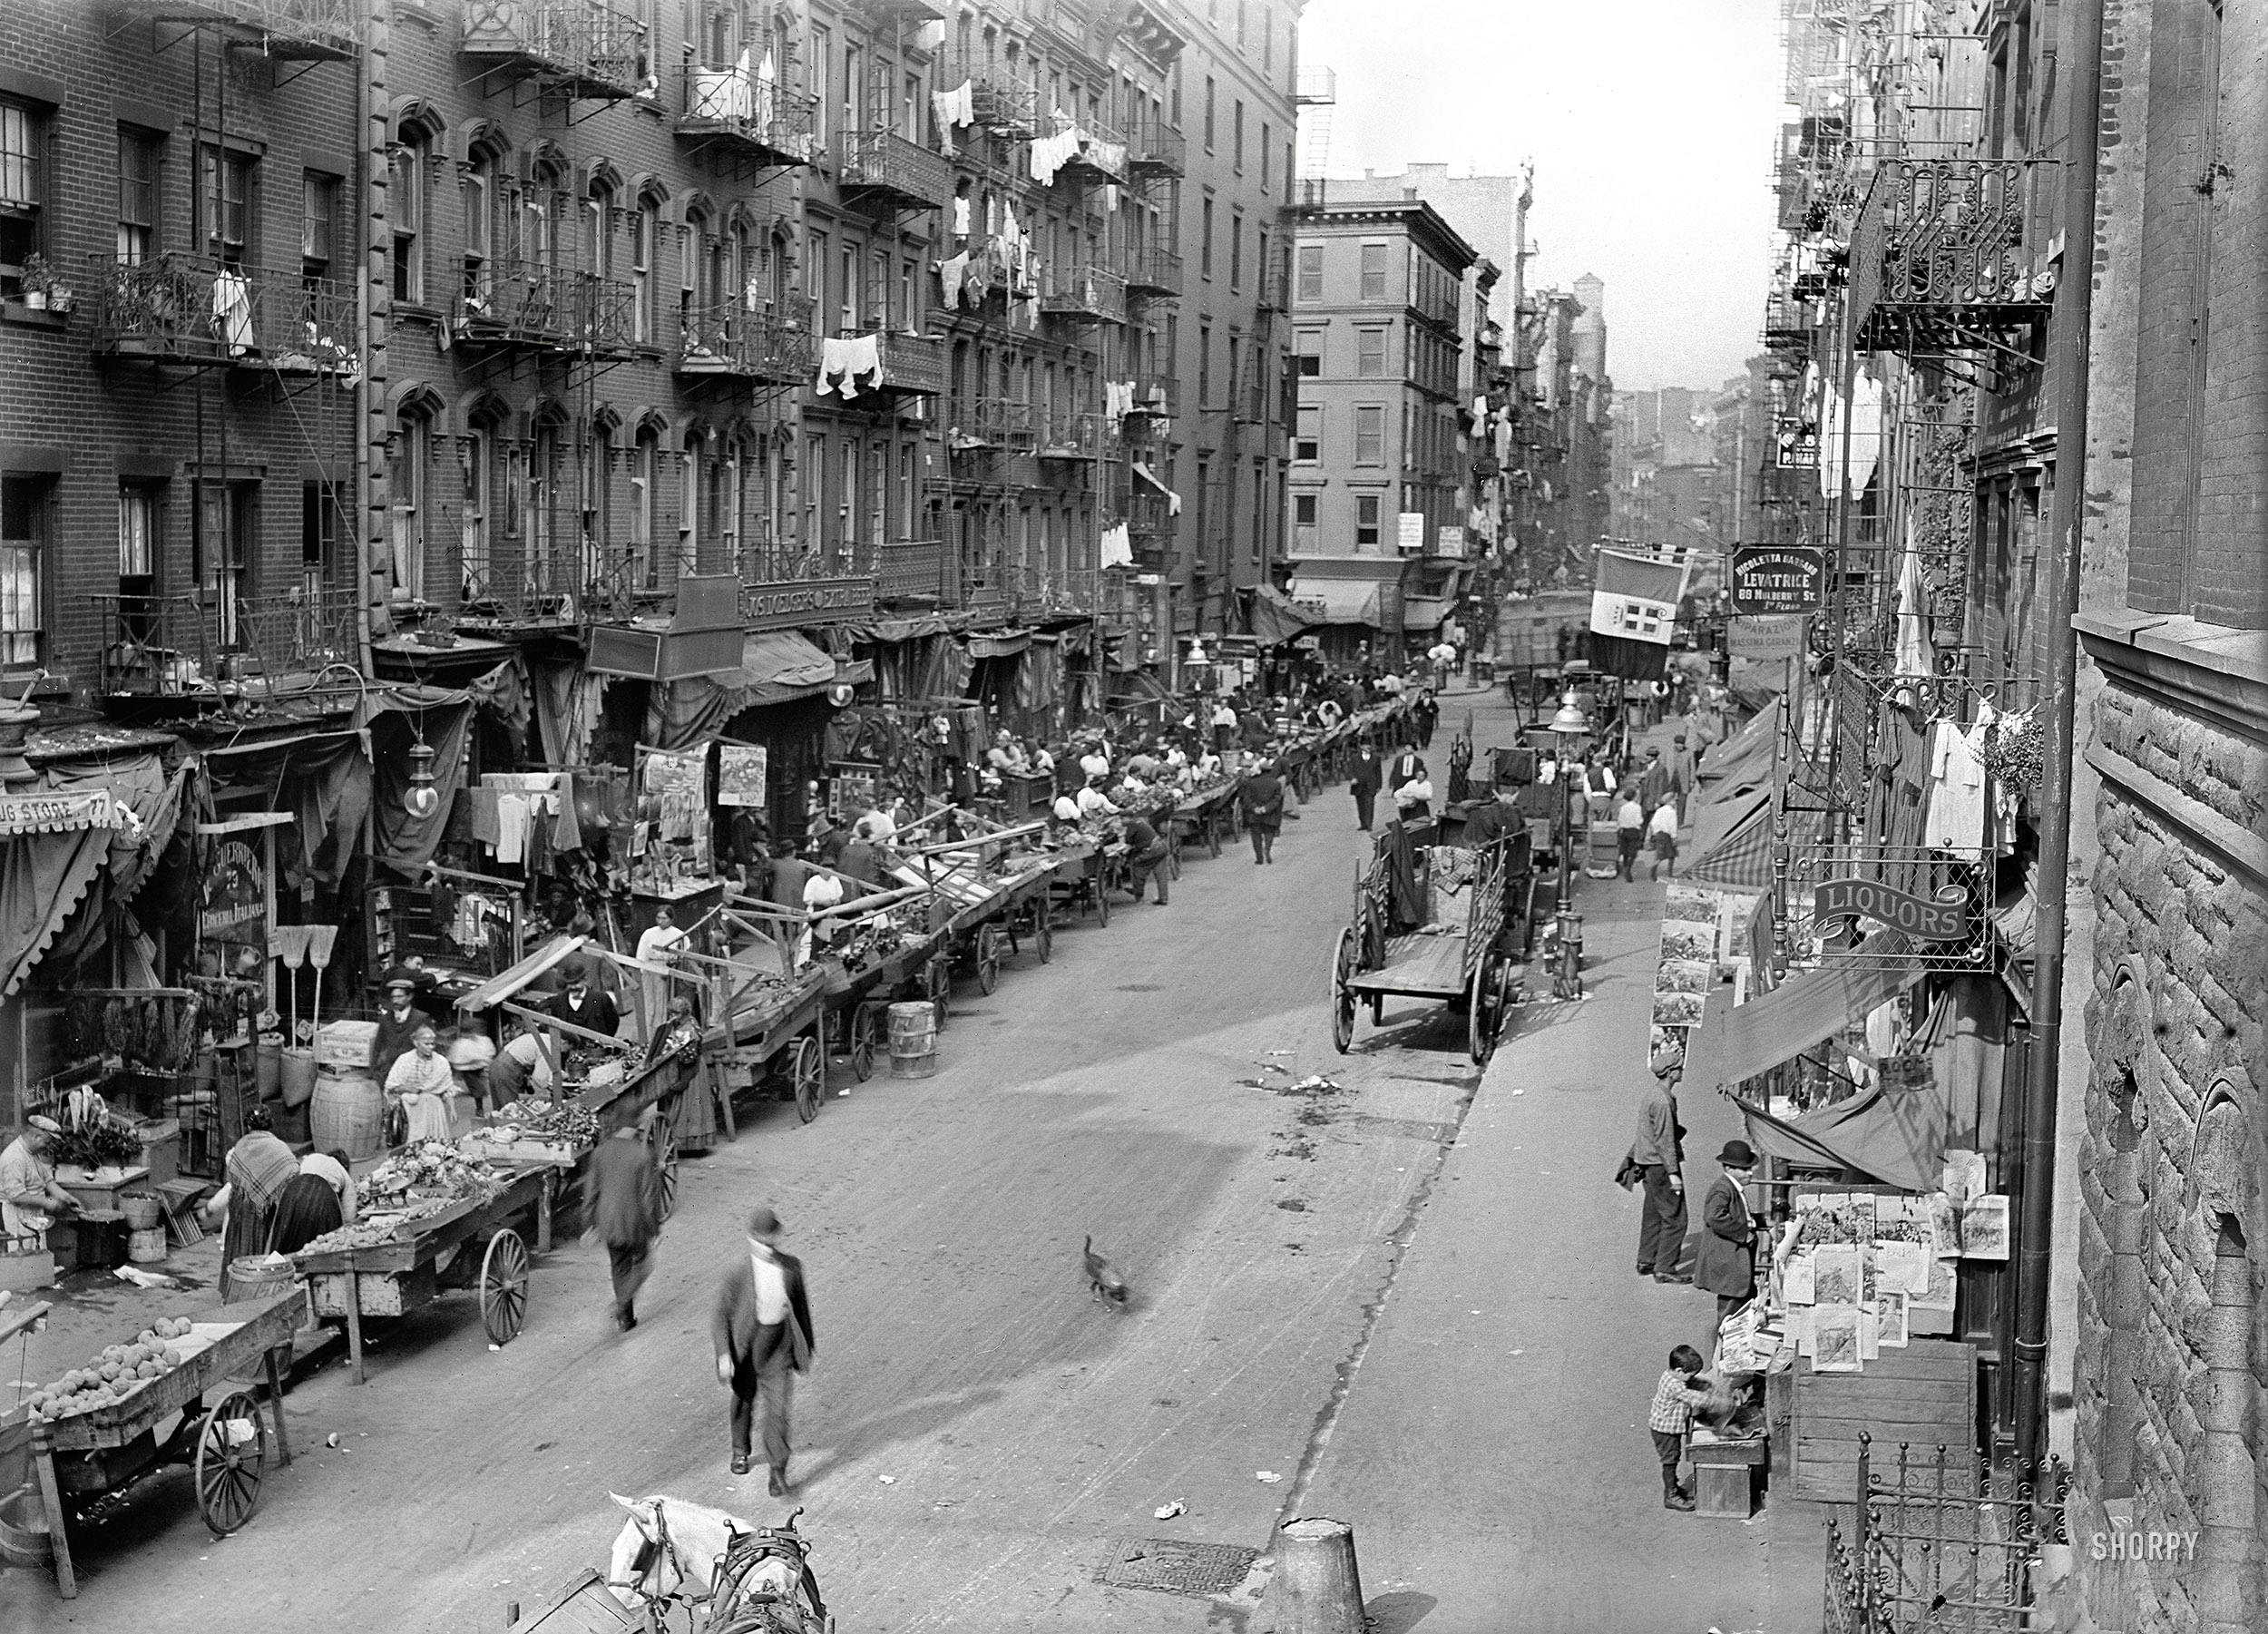 New York circa 1905. "Mulberry Street. Italian neighborhood with street market." 5x7 inch dry plate glass negative, Detroit Publishing Company. View full size.